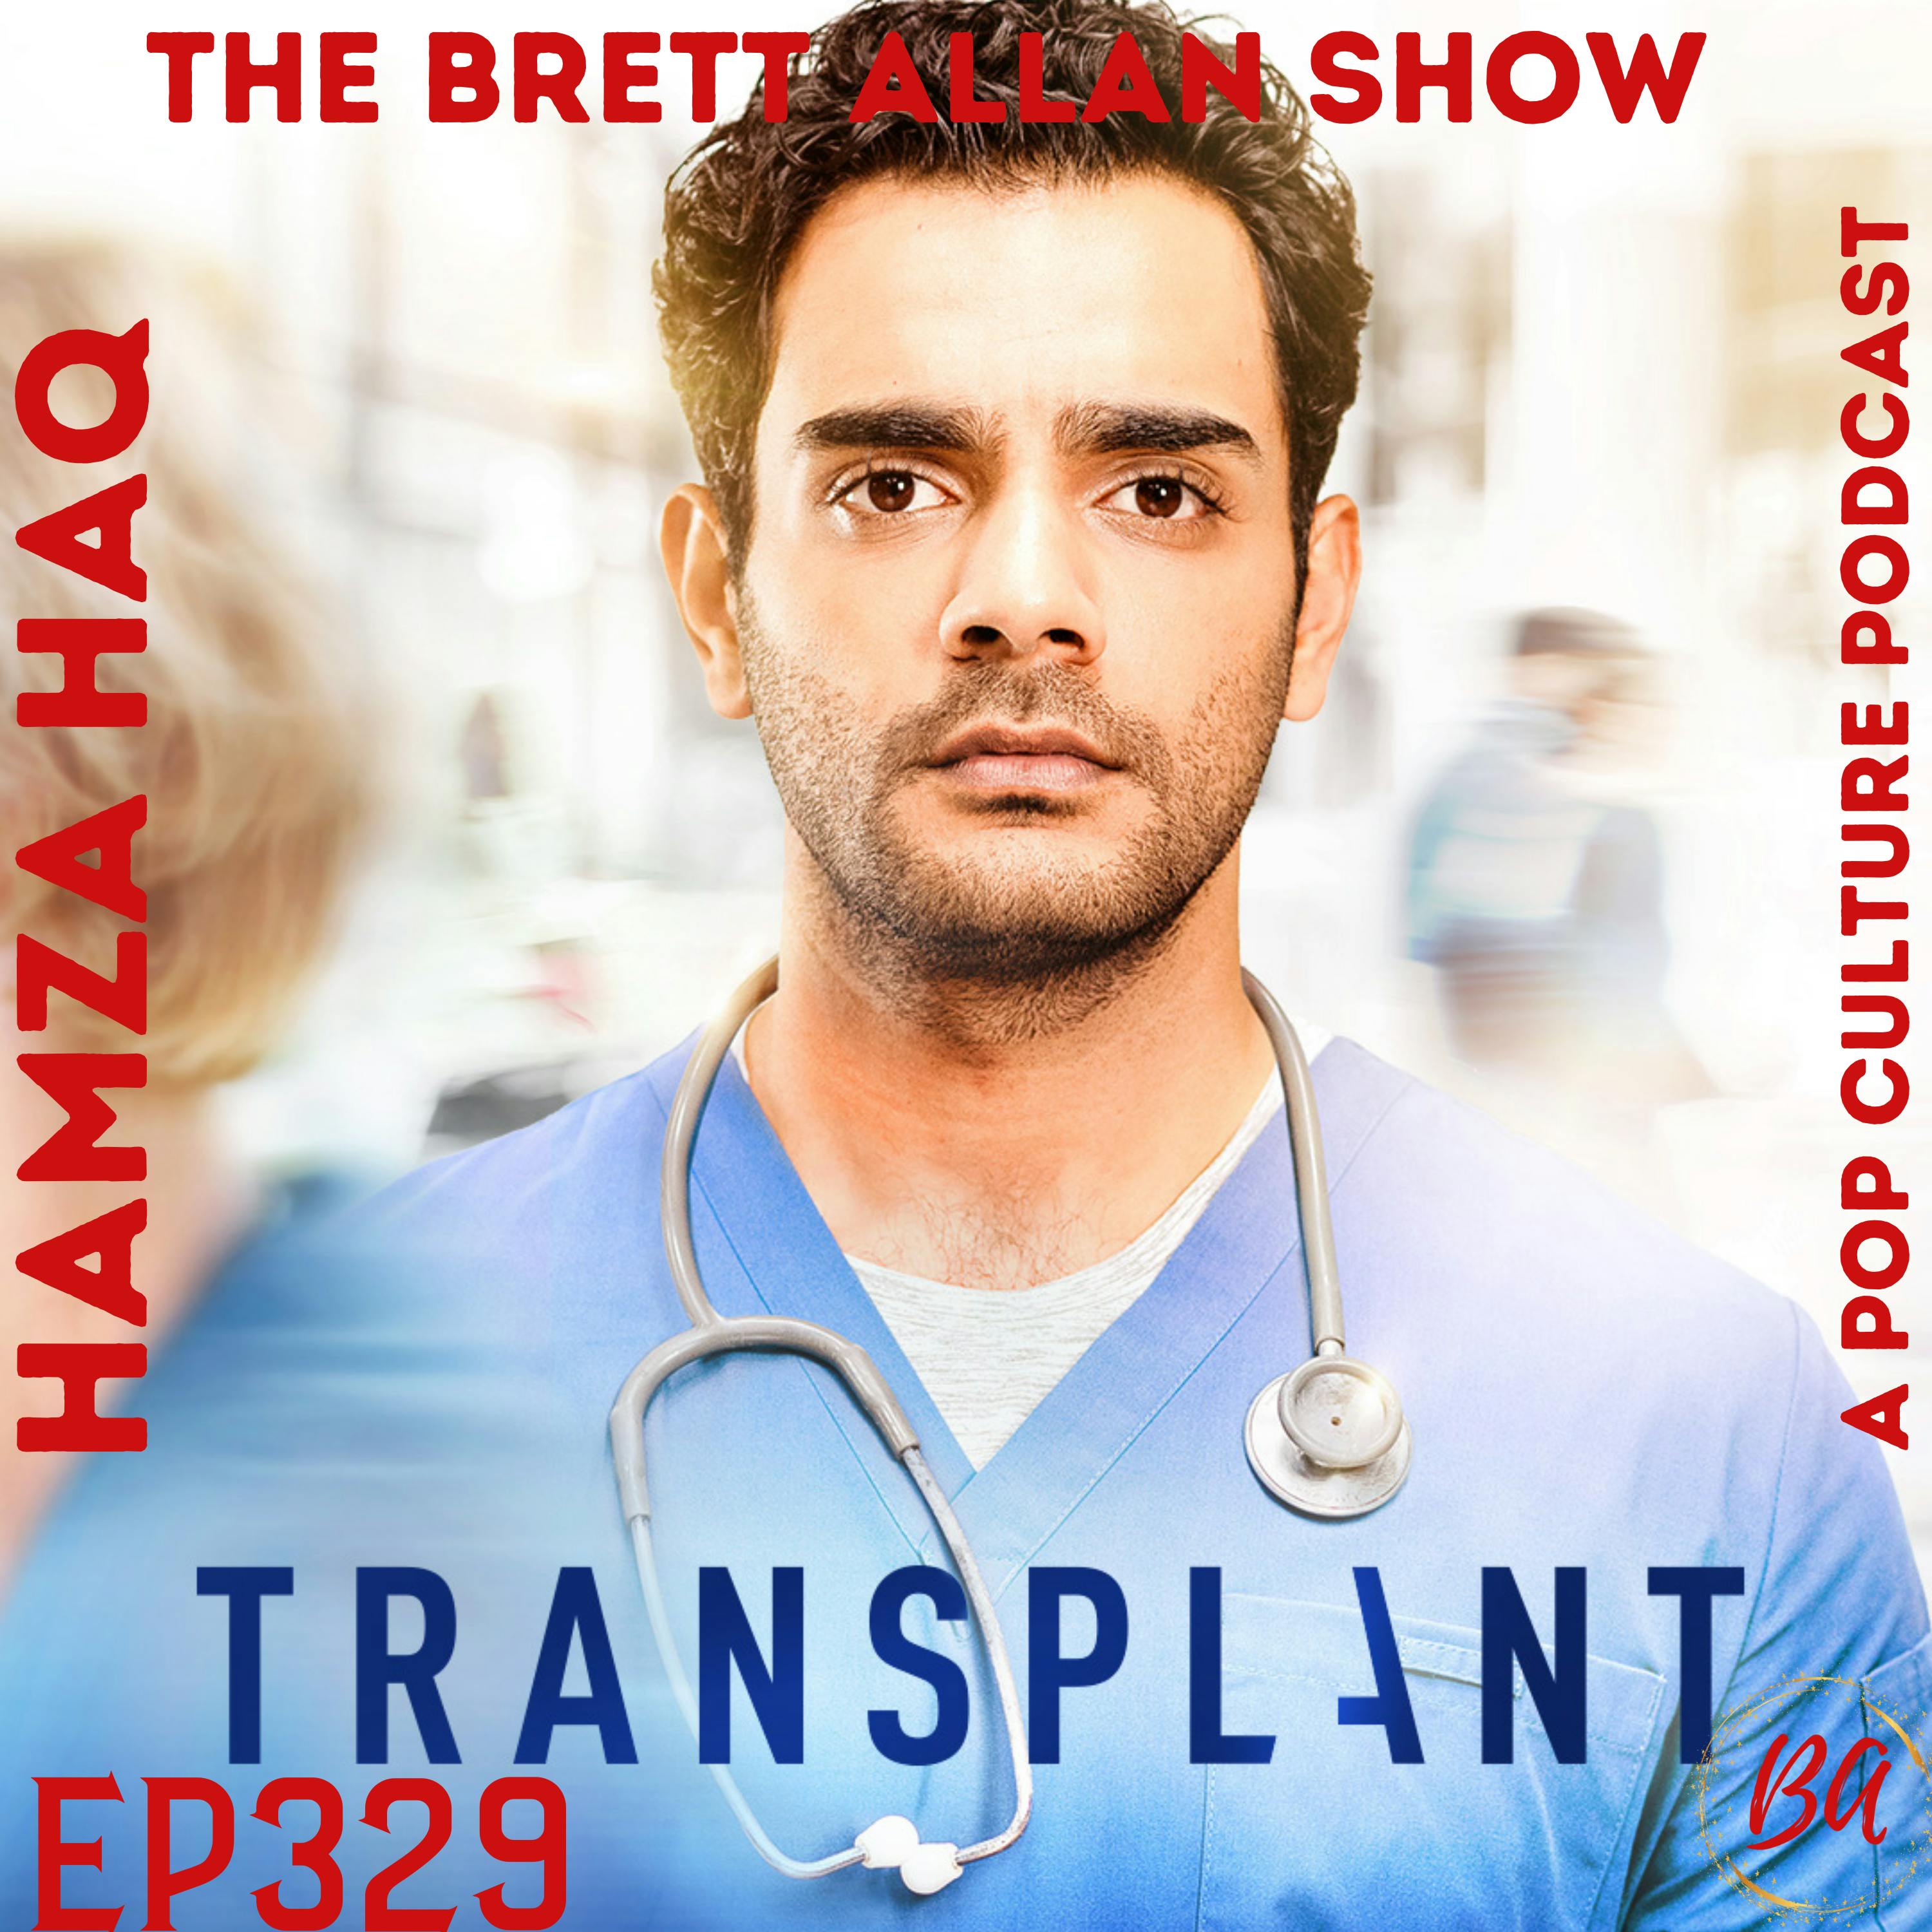 Actor Hamza Haq Star of "Transplant" on NBC Talks About Playing "Dr. Bashir Hamed" | SUNDAYS 10/9c Image